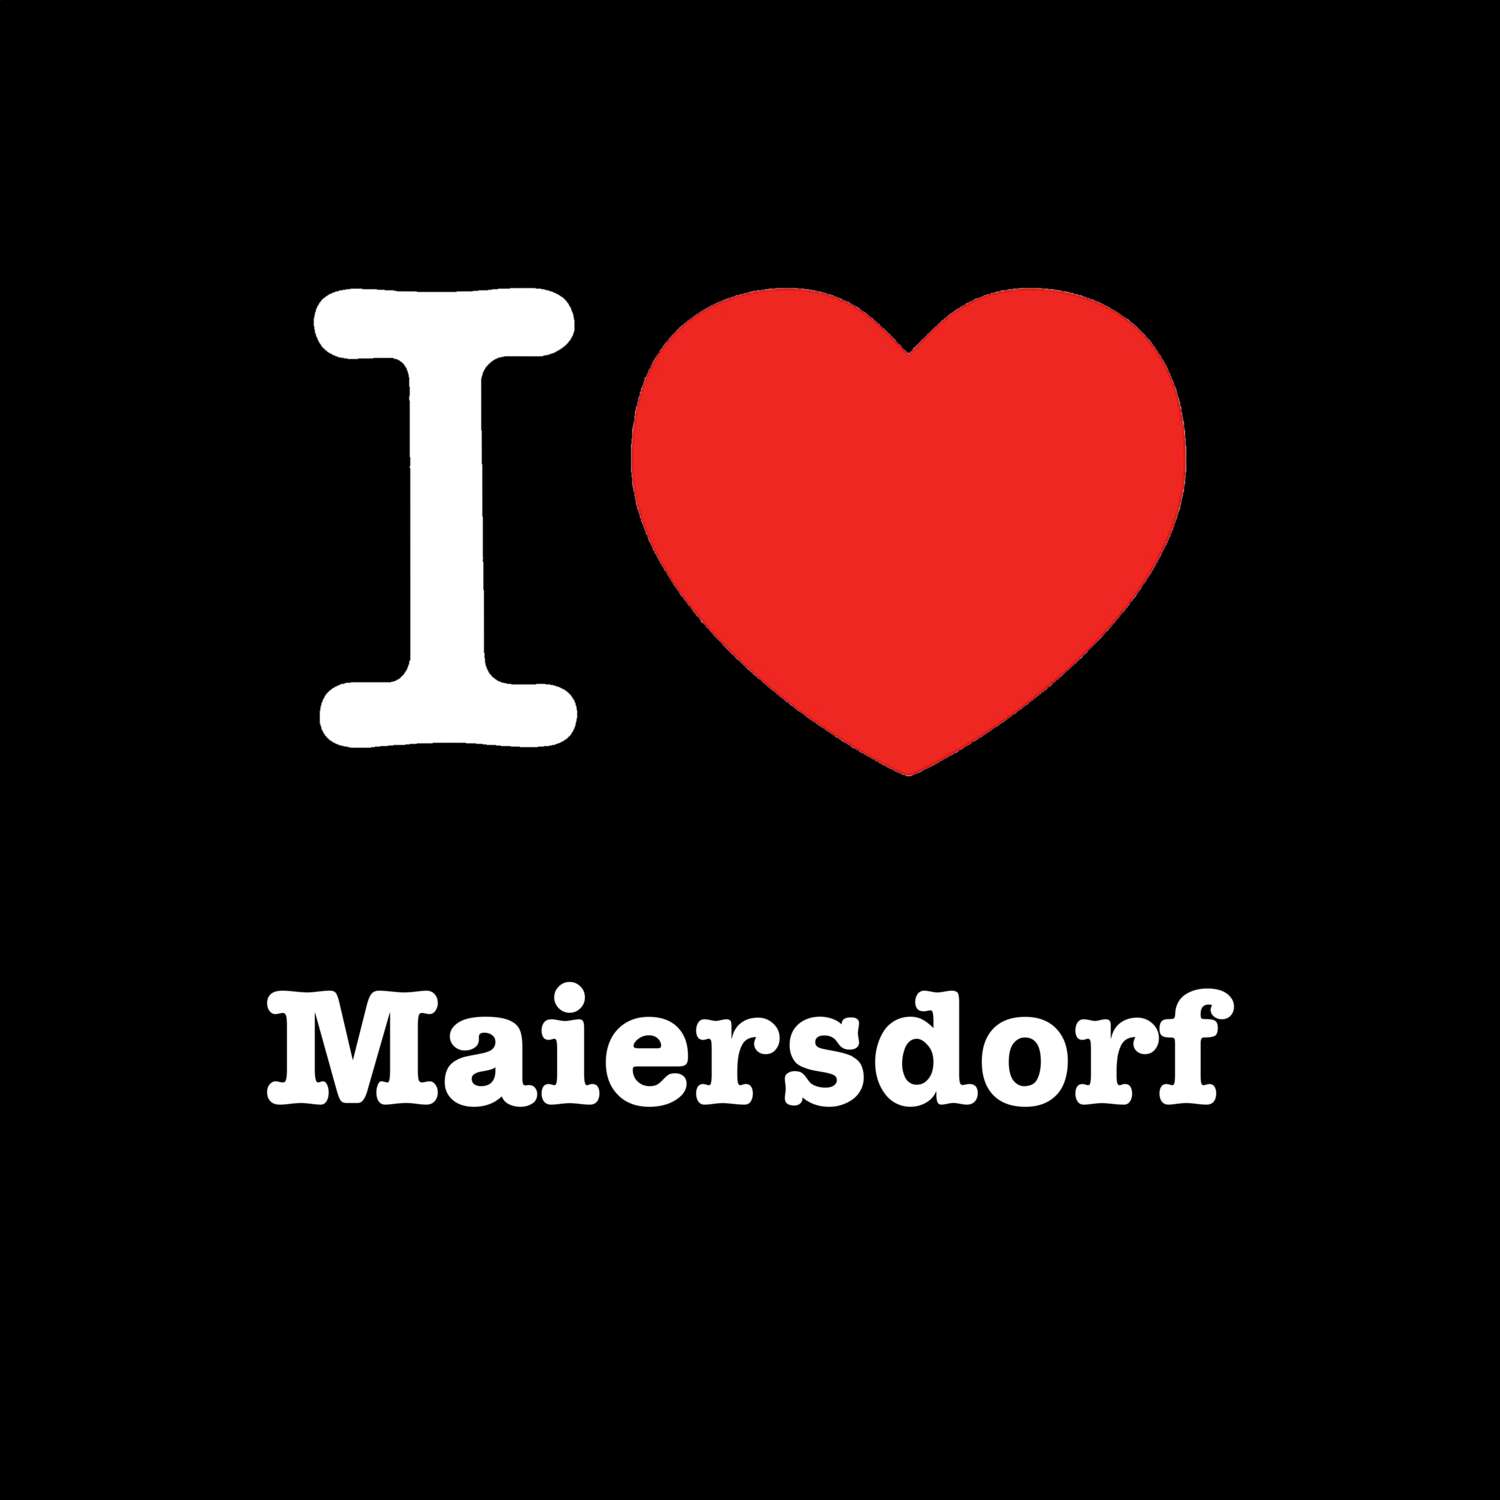 Maiersdorf T-Shirt »I love«